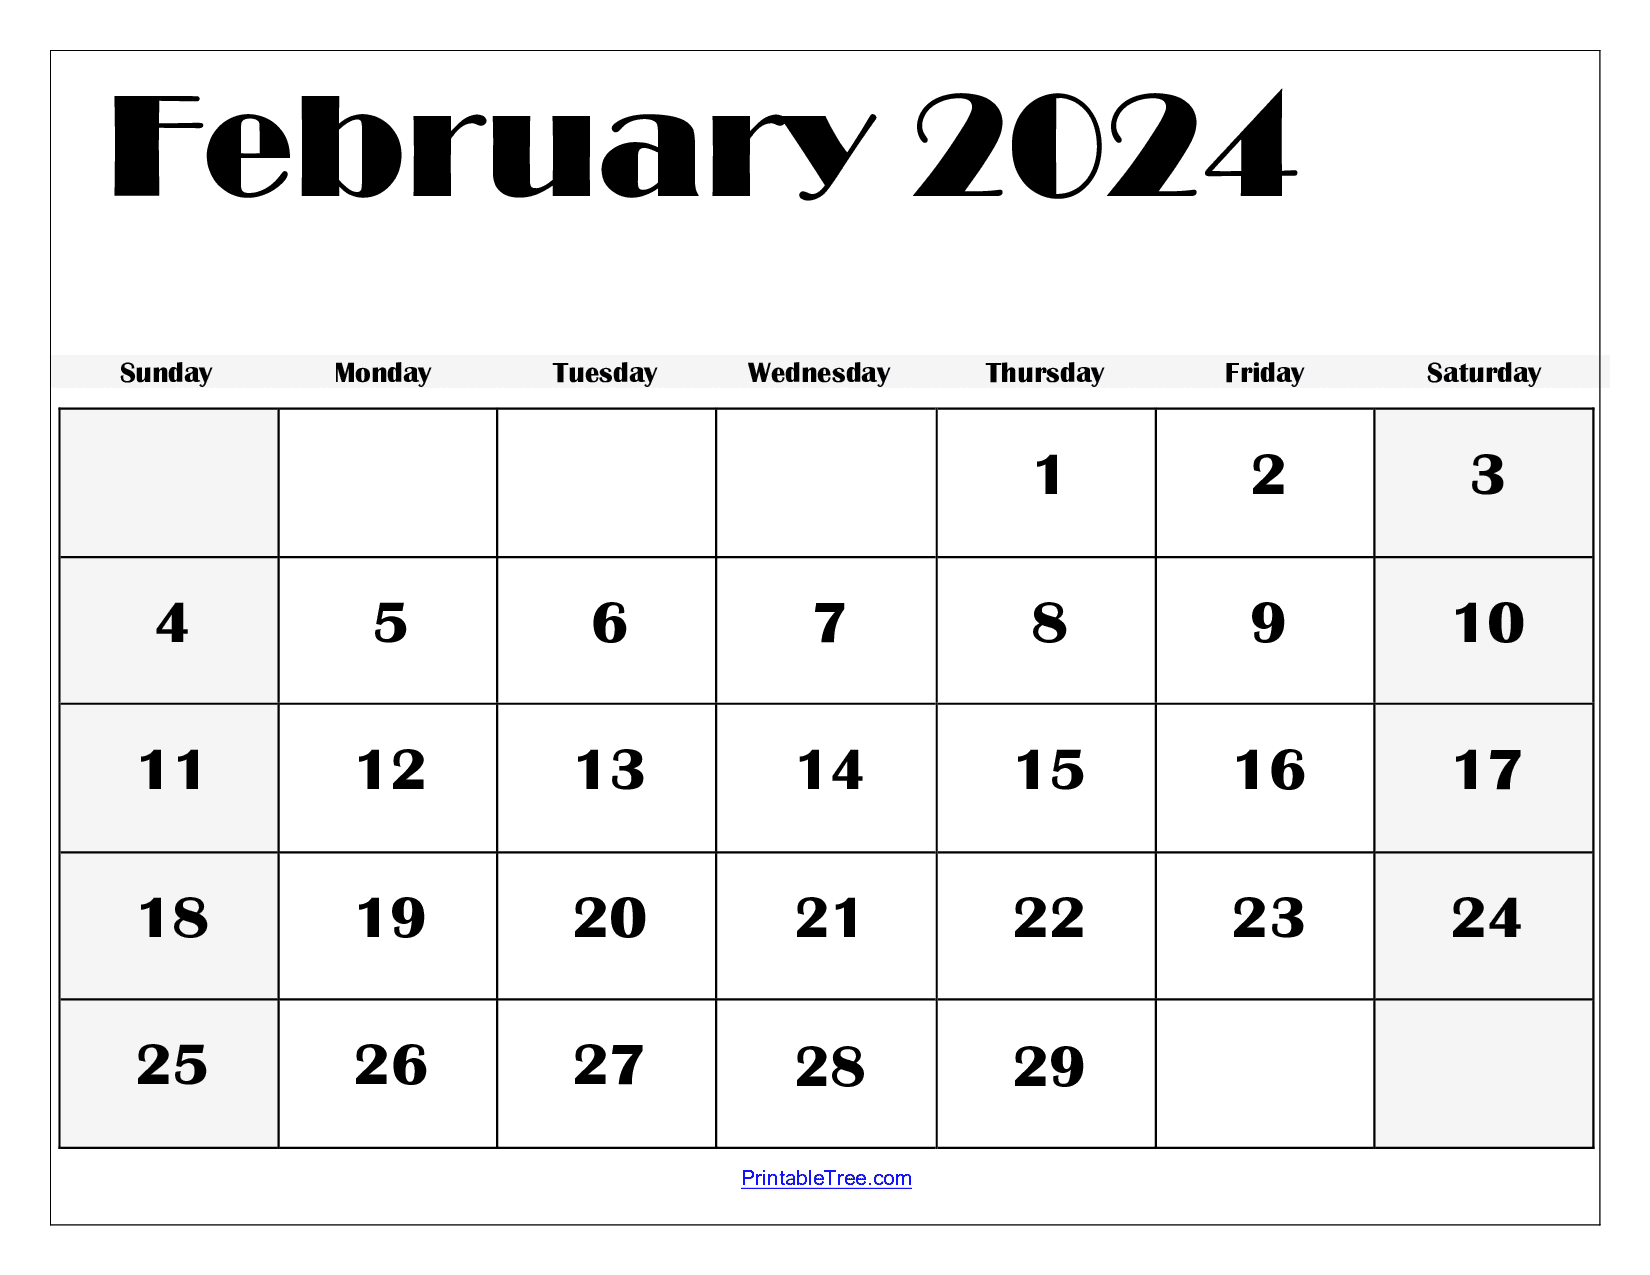 February 2024 Calendar Printable Pdf Template With Holidays for February 2024 Monthly Calendar Printable